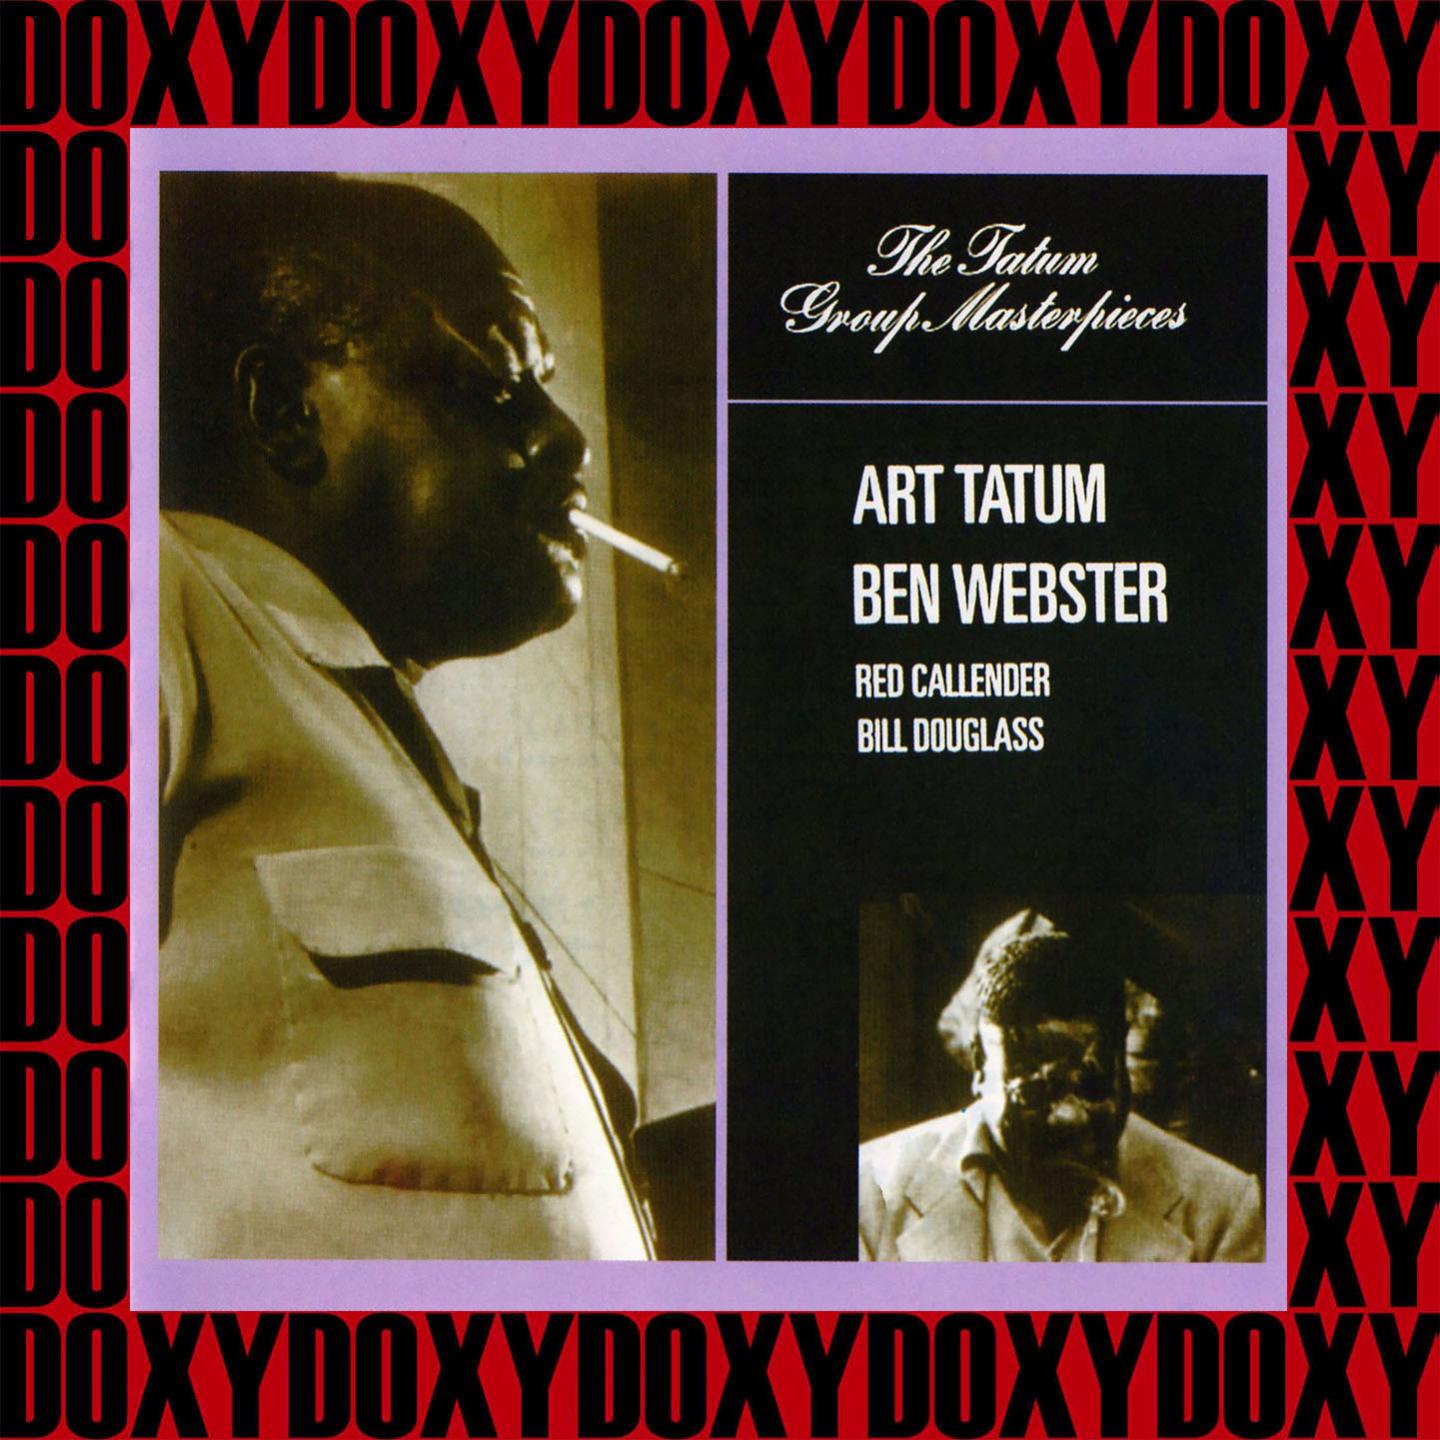 Art Tatum Meets Ben Webster (Bonus Track Version) (Hd Remastered Edition, Doxy Collection)